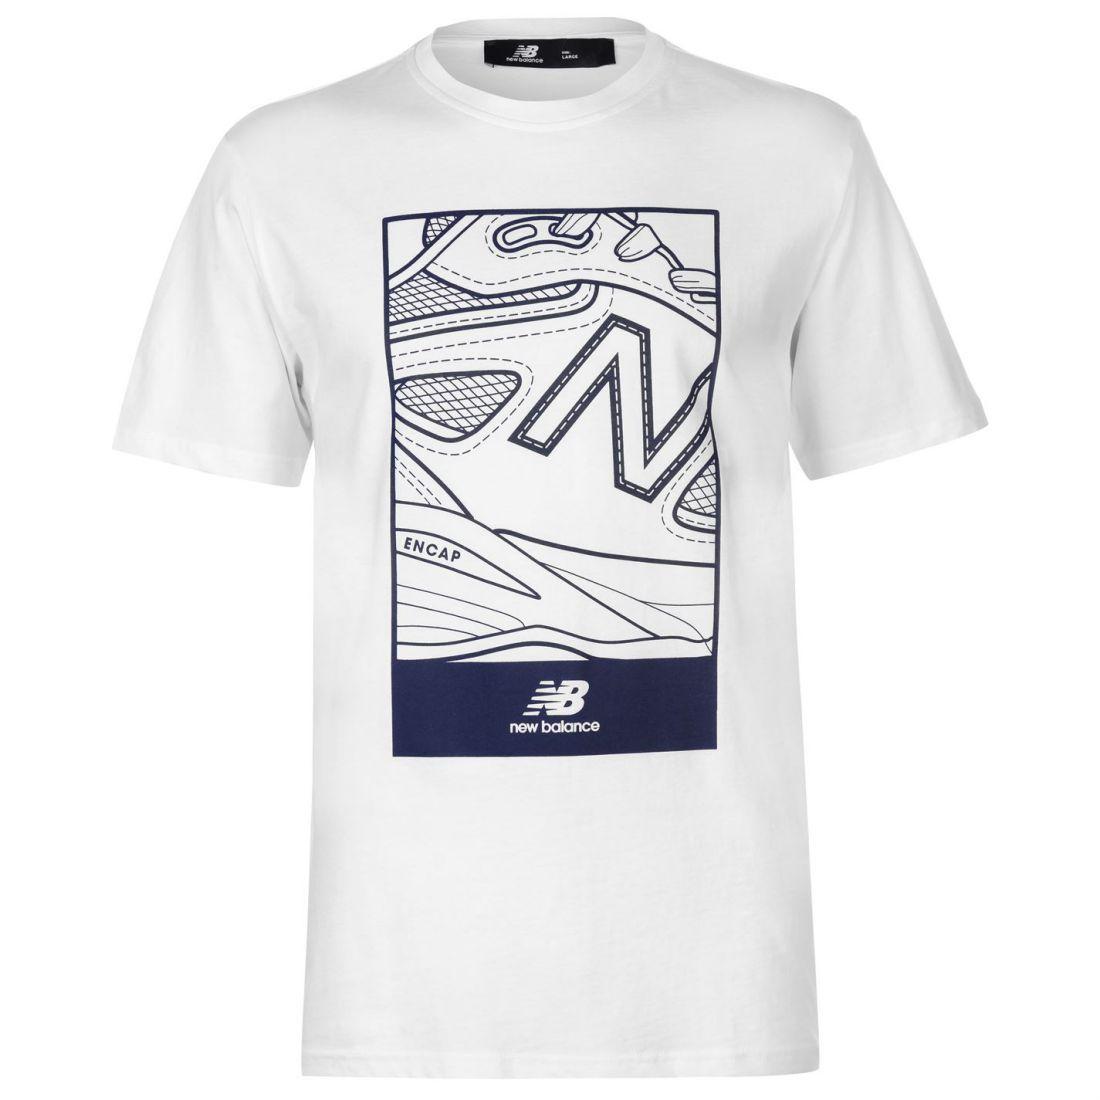 Shoe Logo - New Balance Mens Shoe Logo T Shirt Crew Neck Tee Top Short Sleeve ...